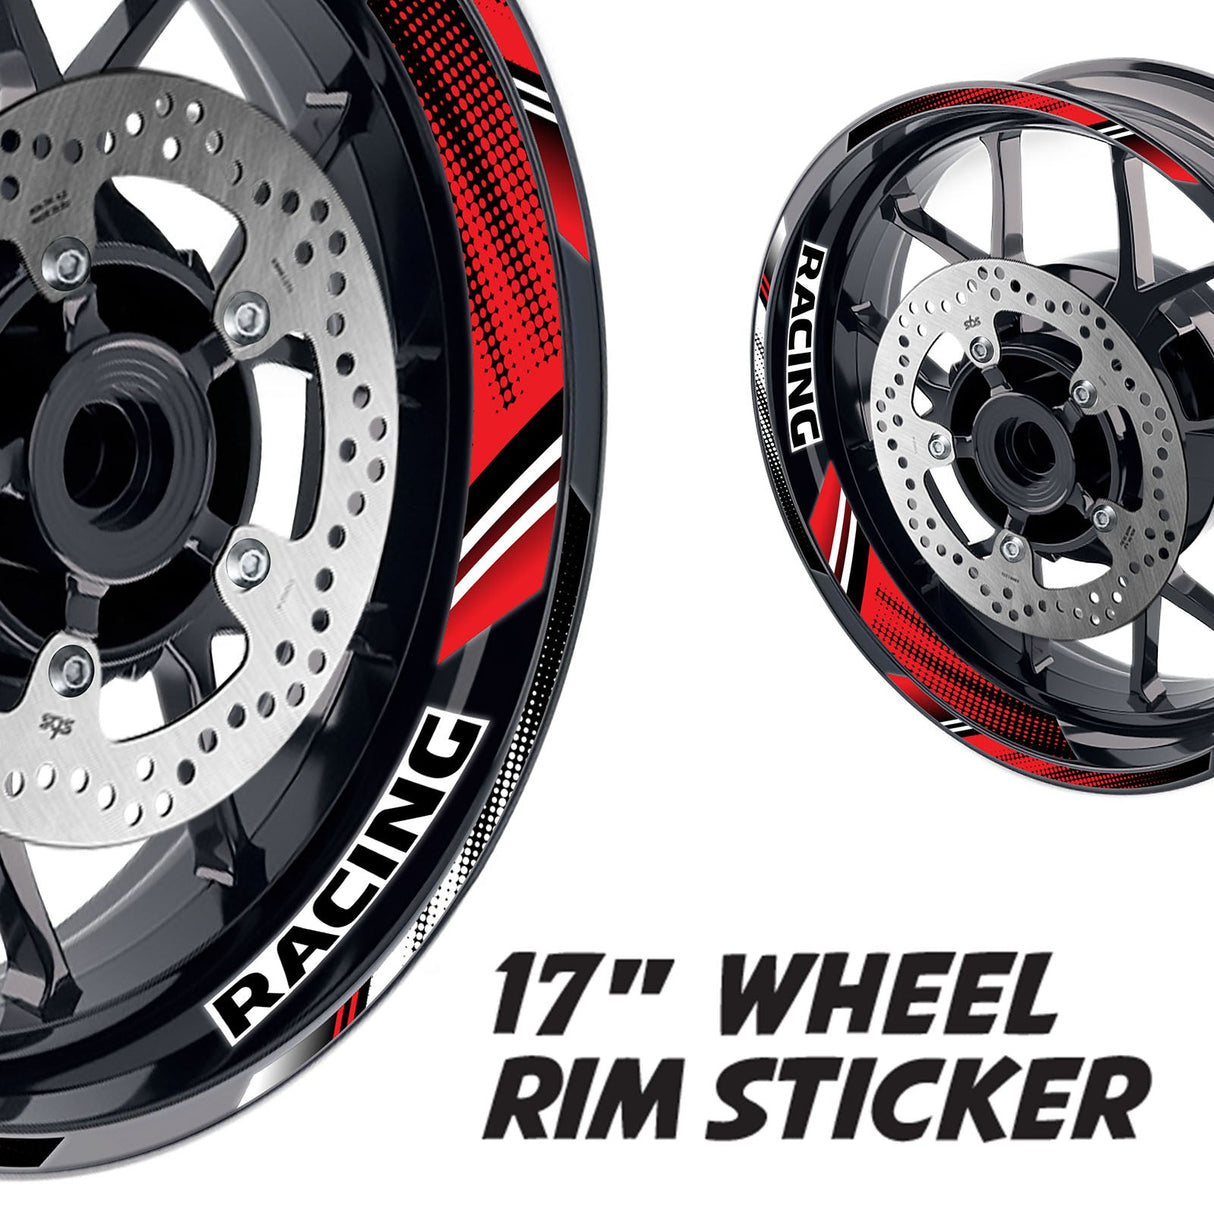 StickerBao Red 17 inch GP17 Platinum Inner Edge Rim Sticker Universal Motorcycle Rim Wheel Decal Racing For Honda